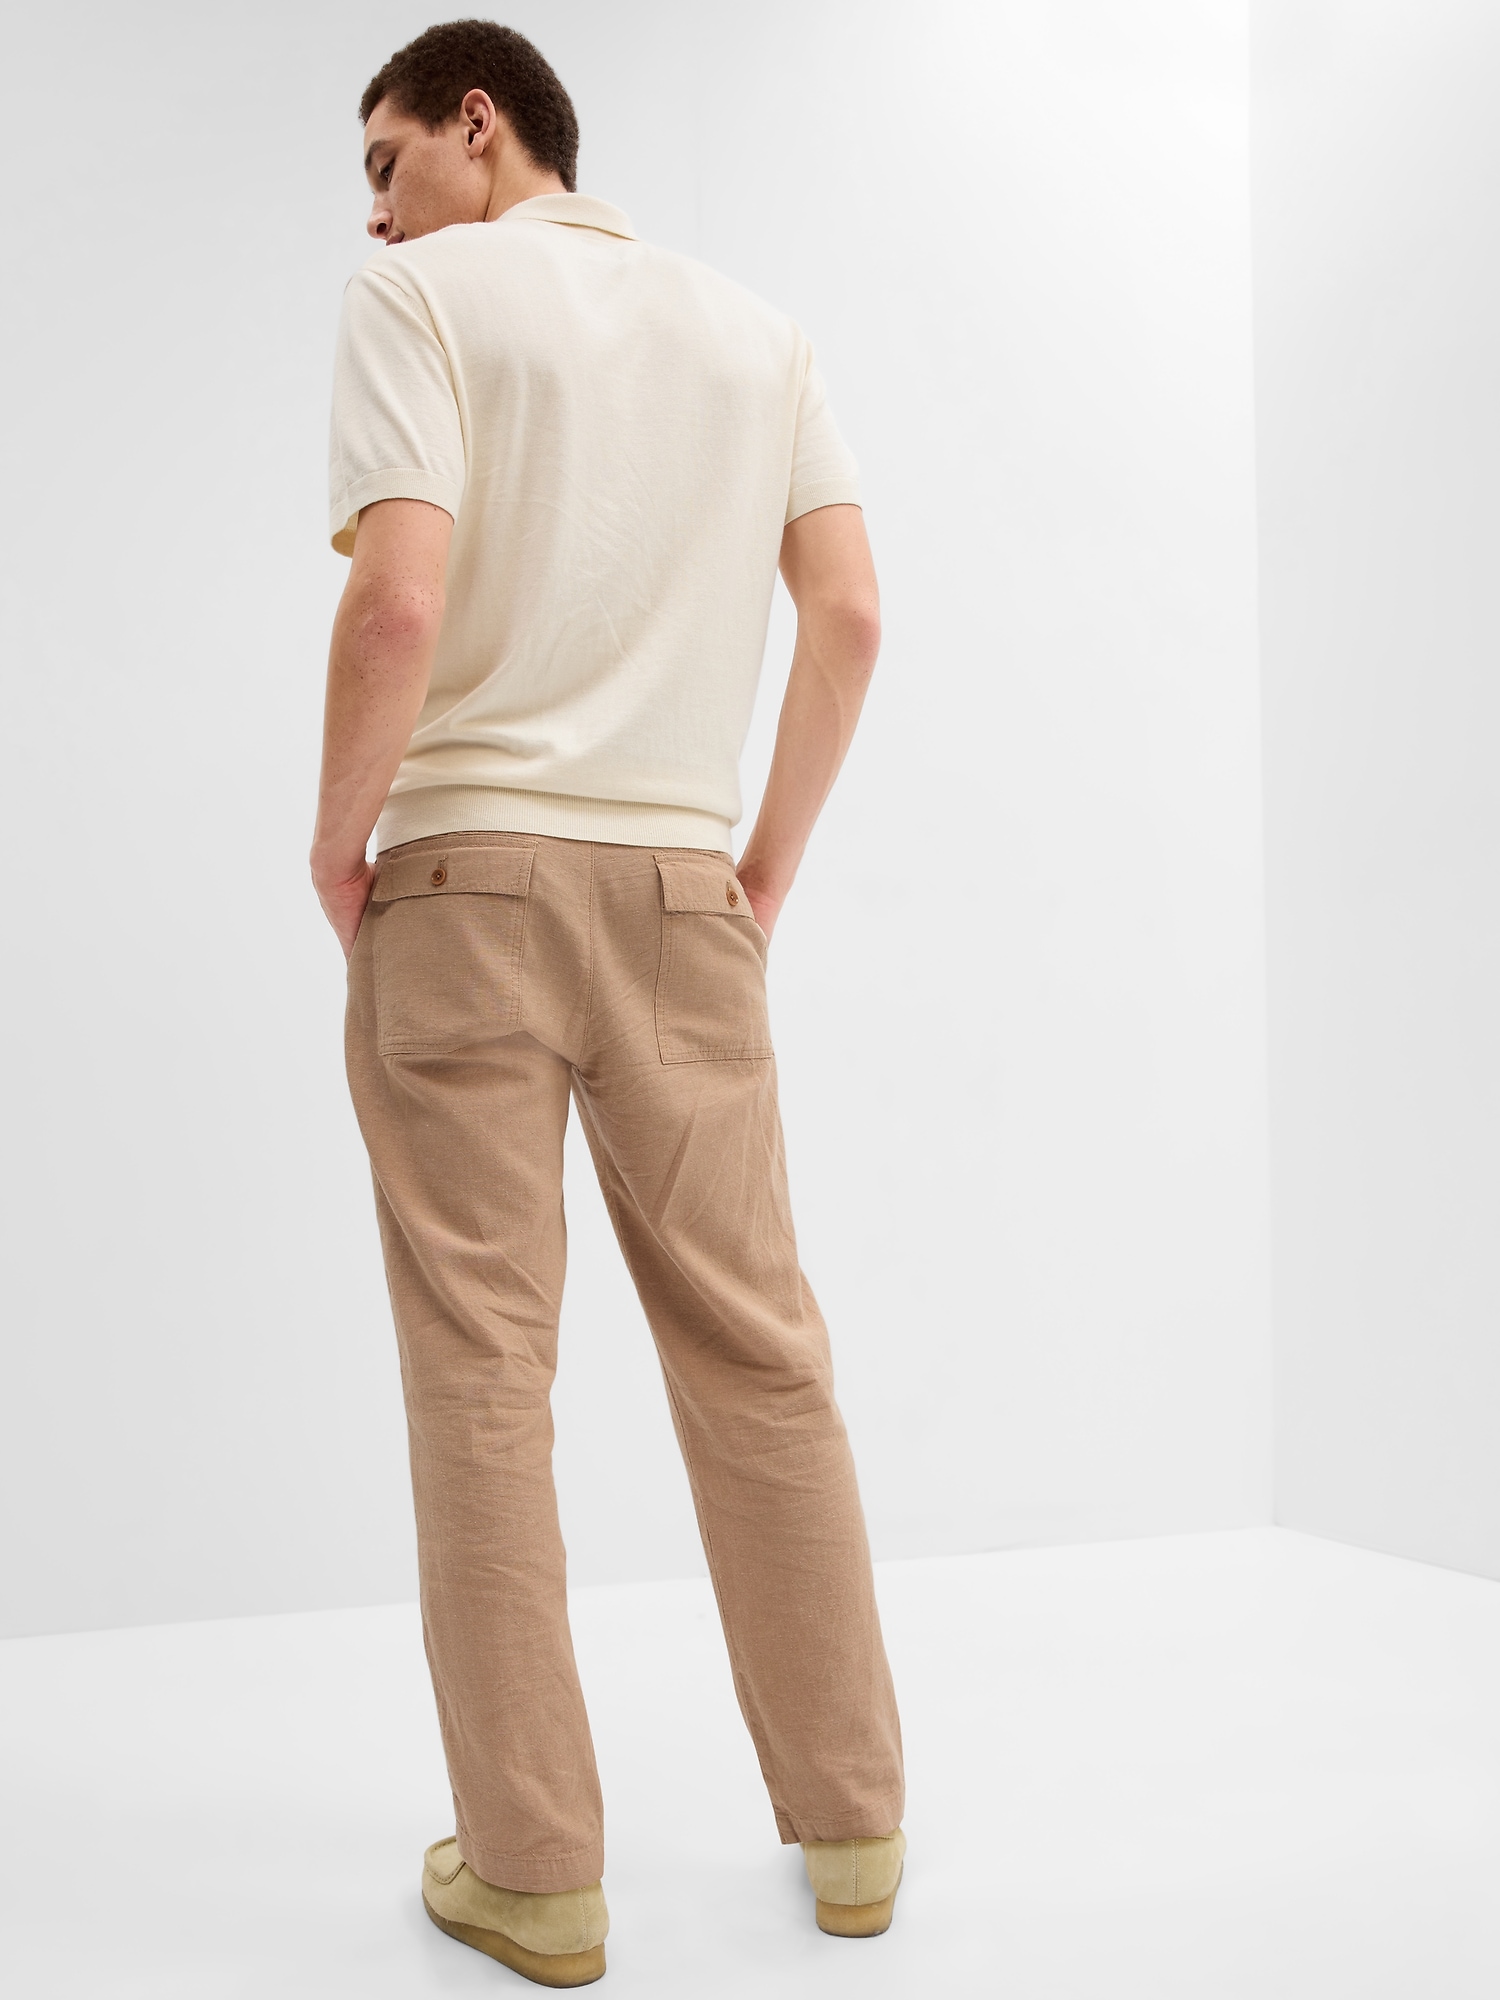 Pull-on linen pants | Gap